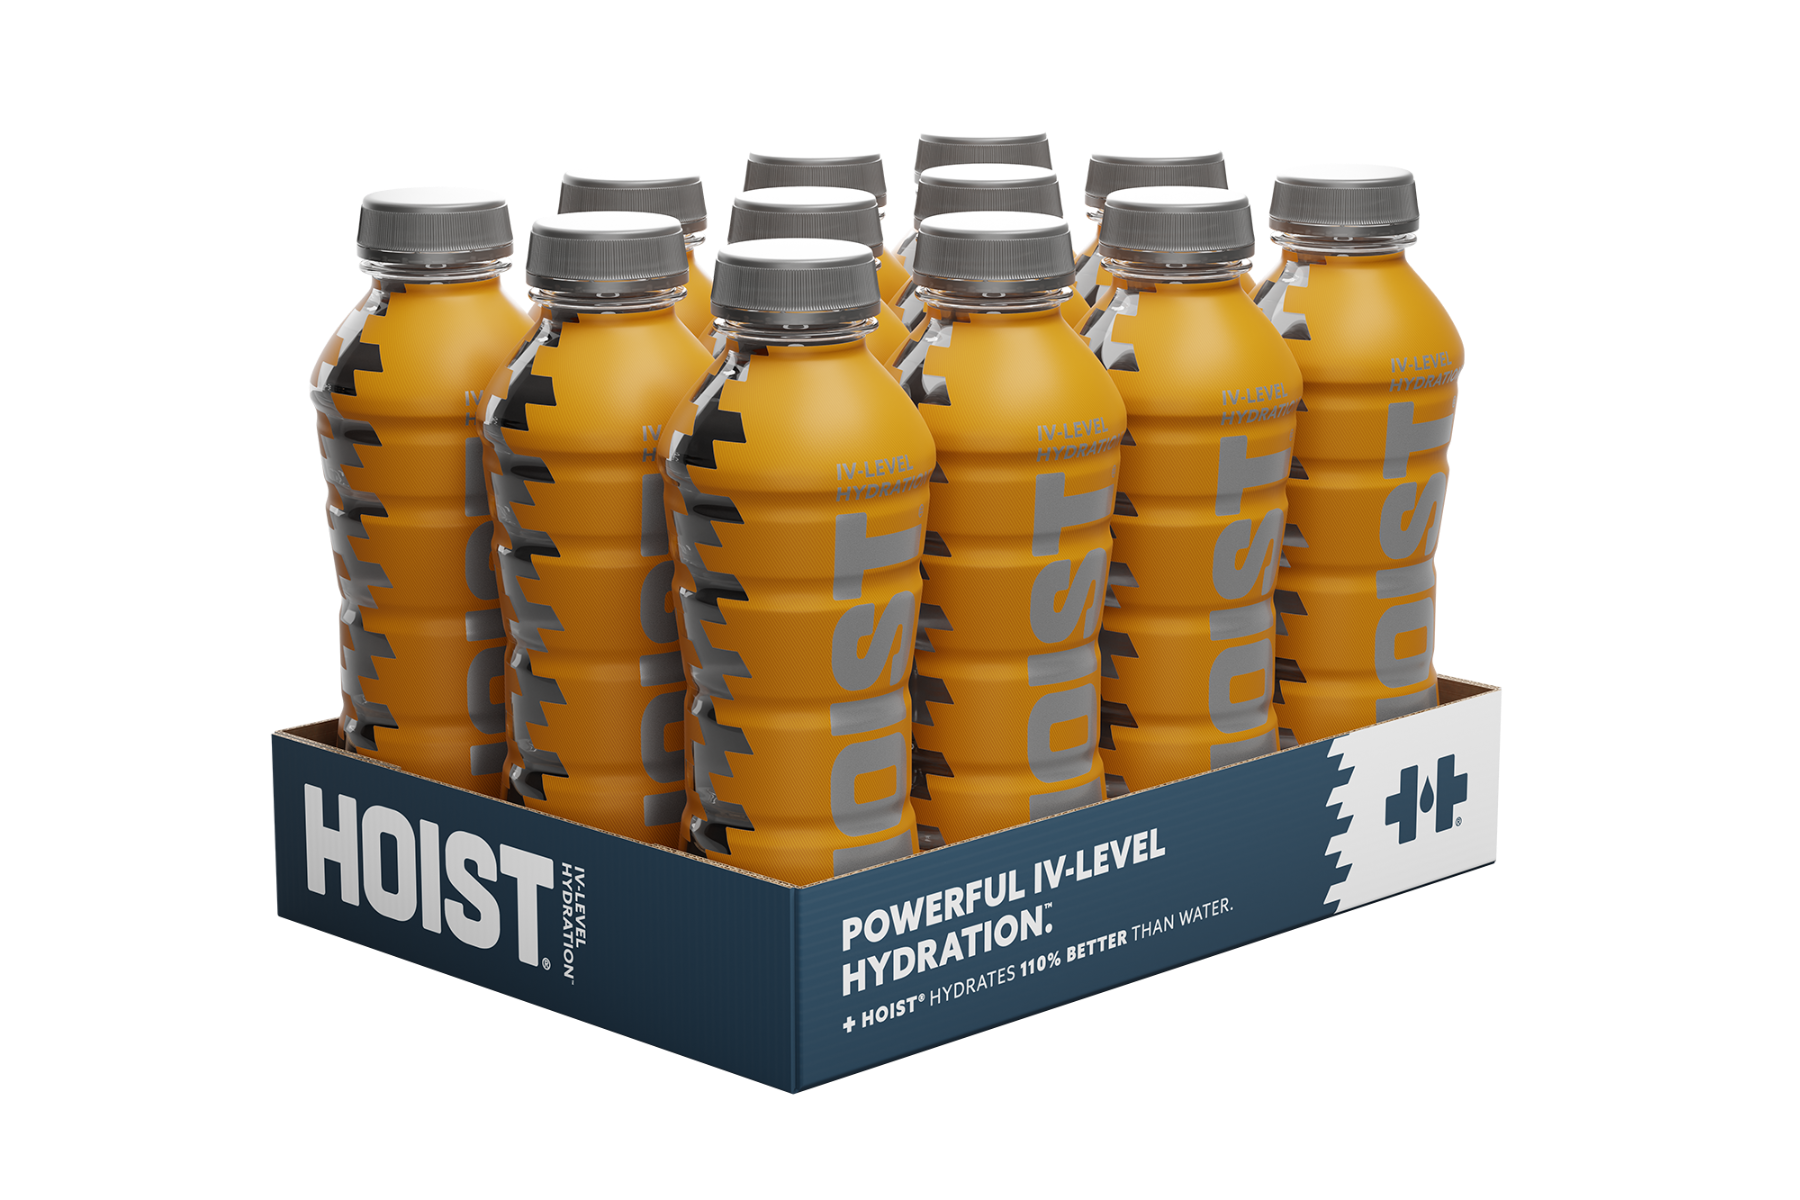 Hoist Ready-to-Drink IV-Level Hydration Bottles - group